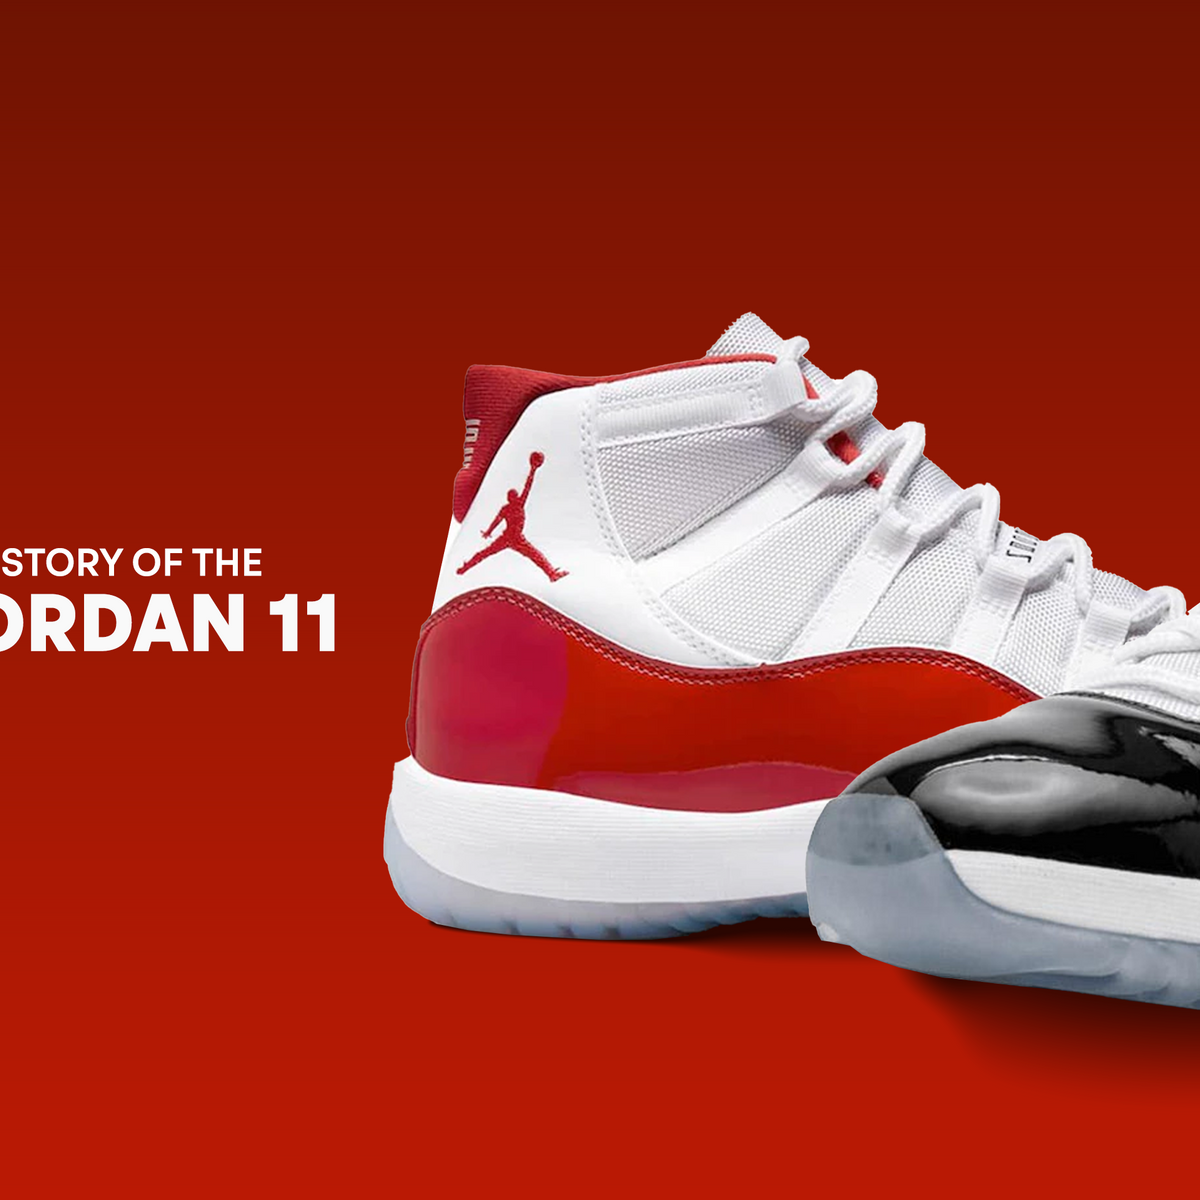 The Story Behind The Air Jordan 11